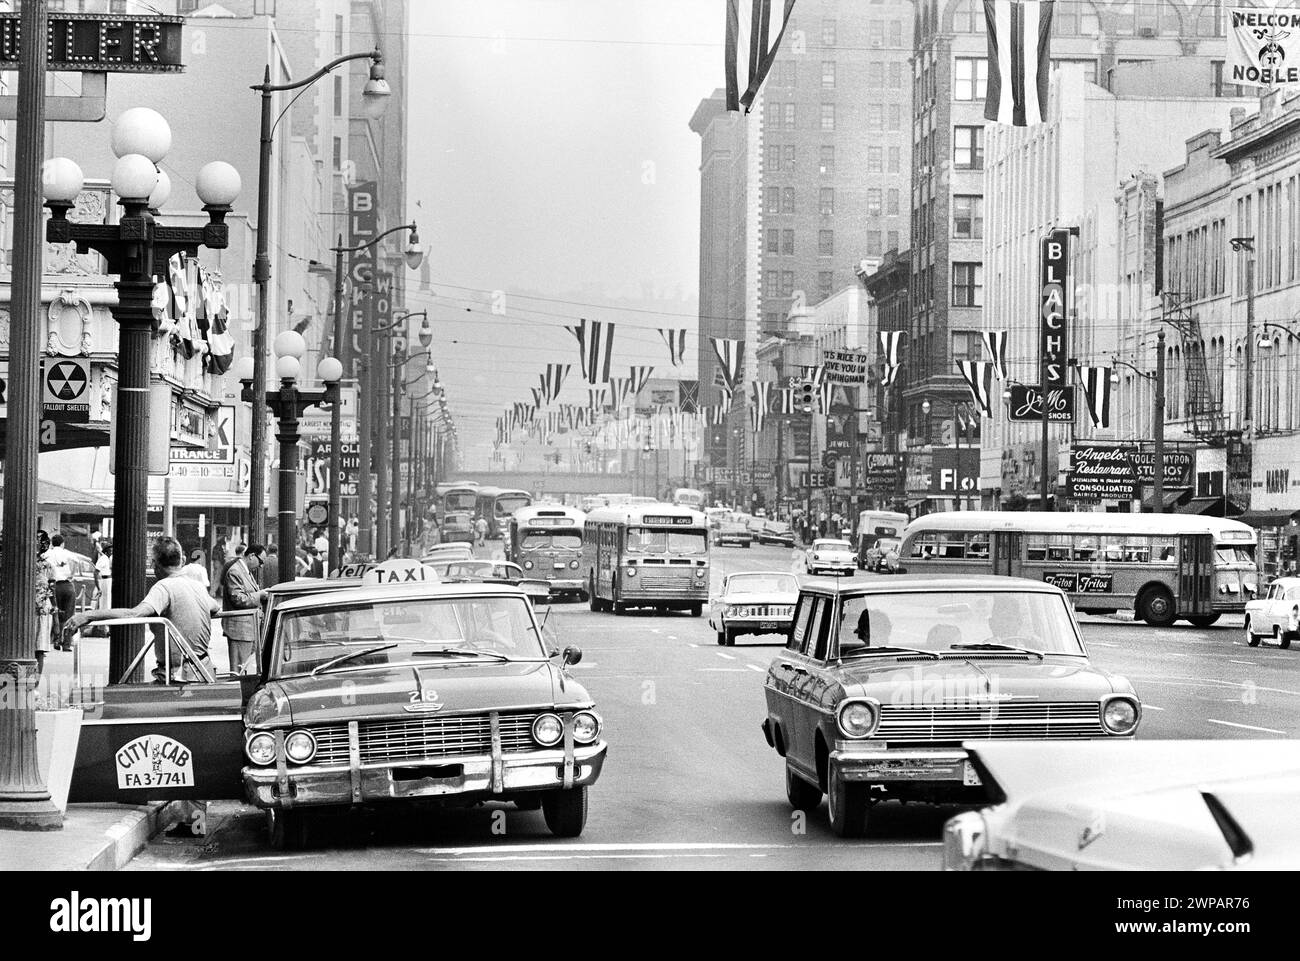 Straßenszene, Geschäftsviertel, Birmingham, Alabama, USA, Marion S. Trikosko, U.S. News & World Report Magazine Photograph Collection, 14. Mai 1963 Stockfoto